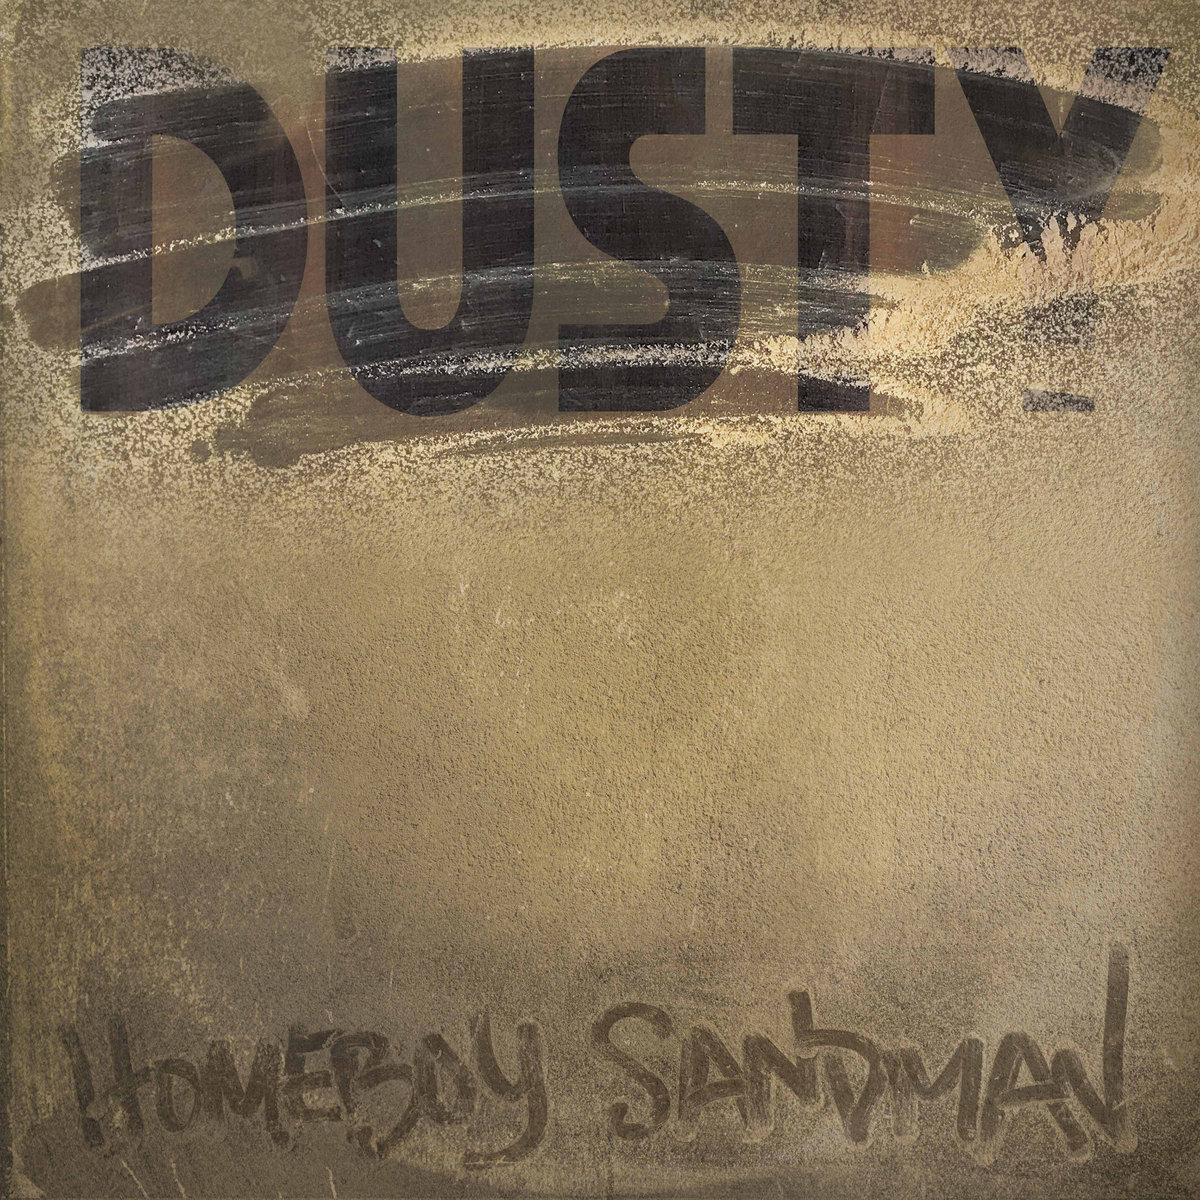 Dusty_homeboy_sandman